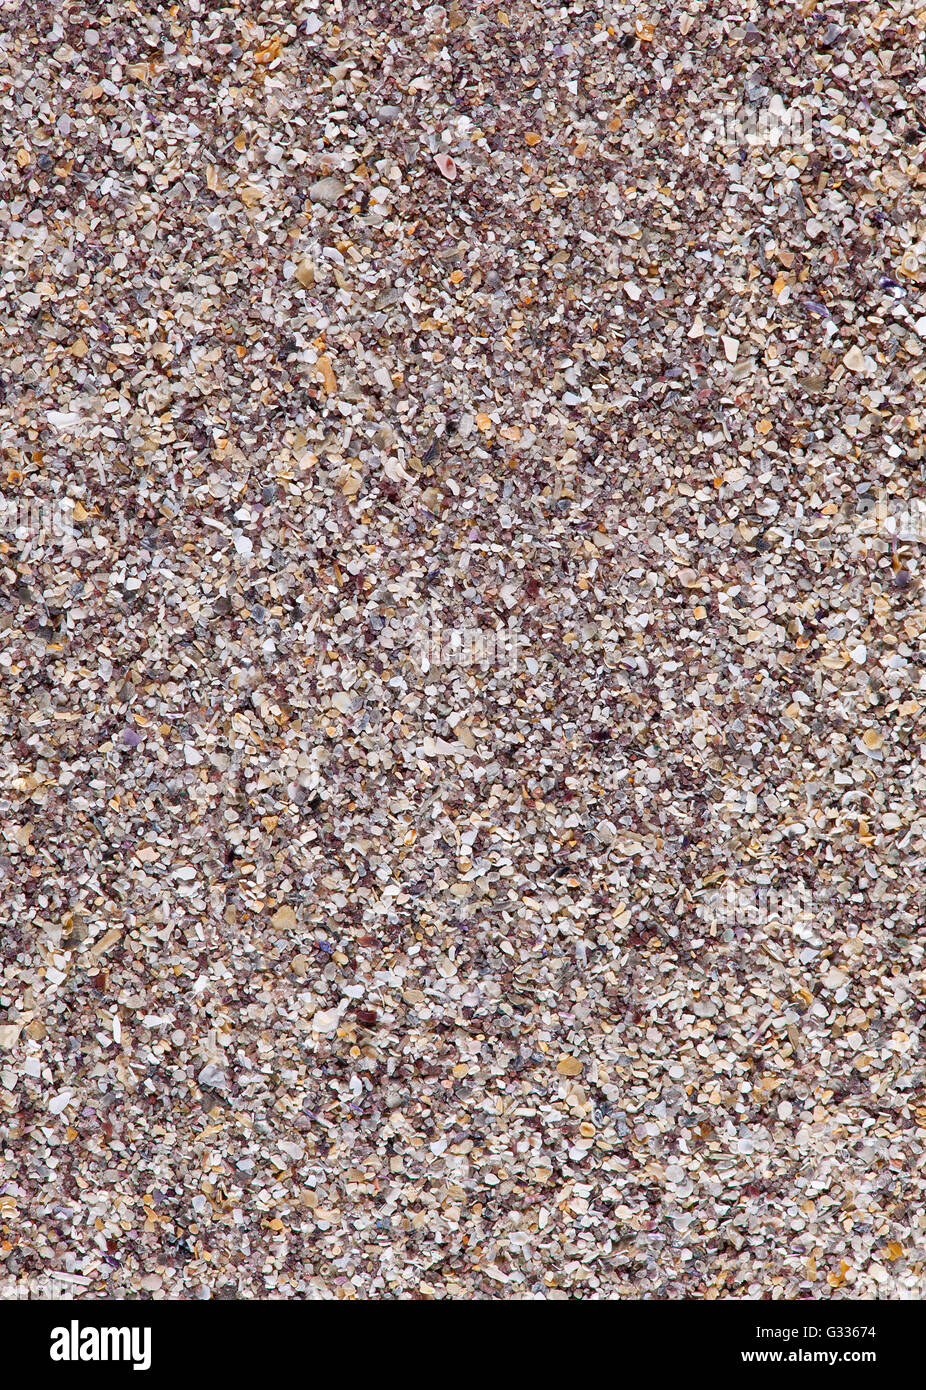 Sand sample from Ventry, Ireland Stock Photo